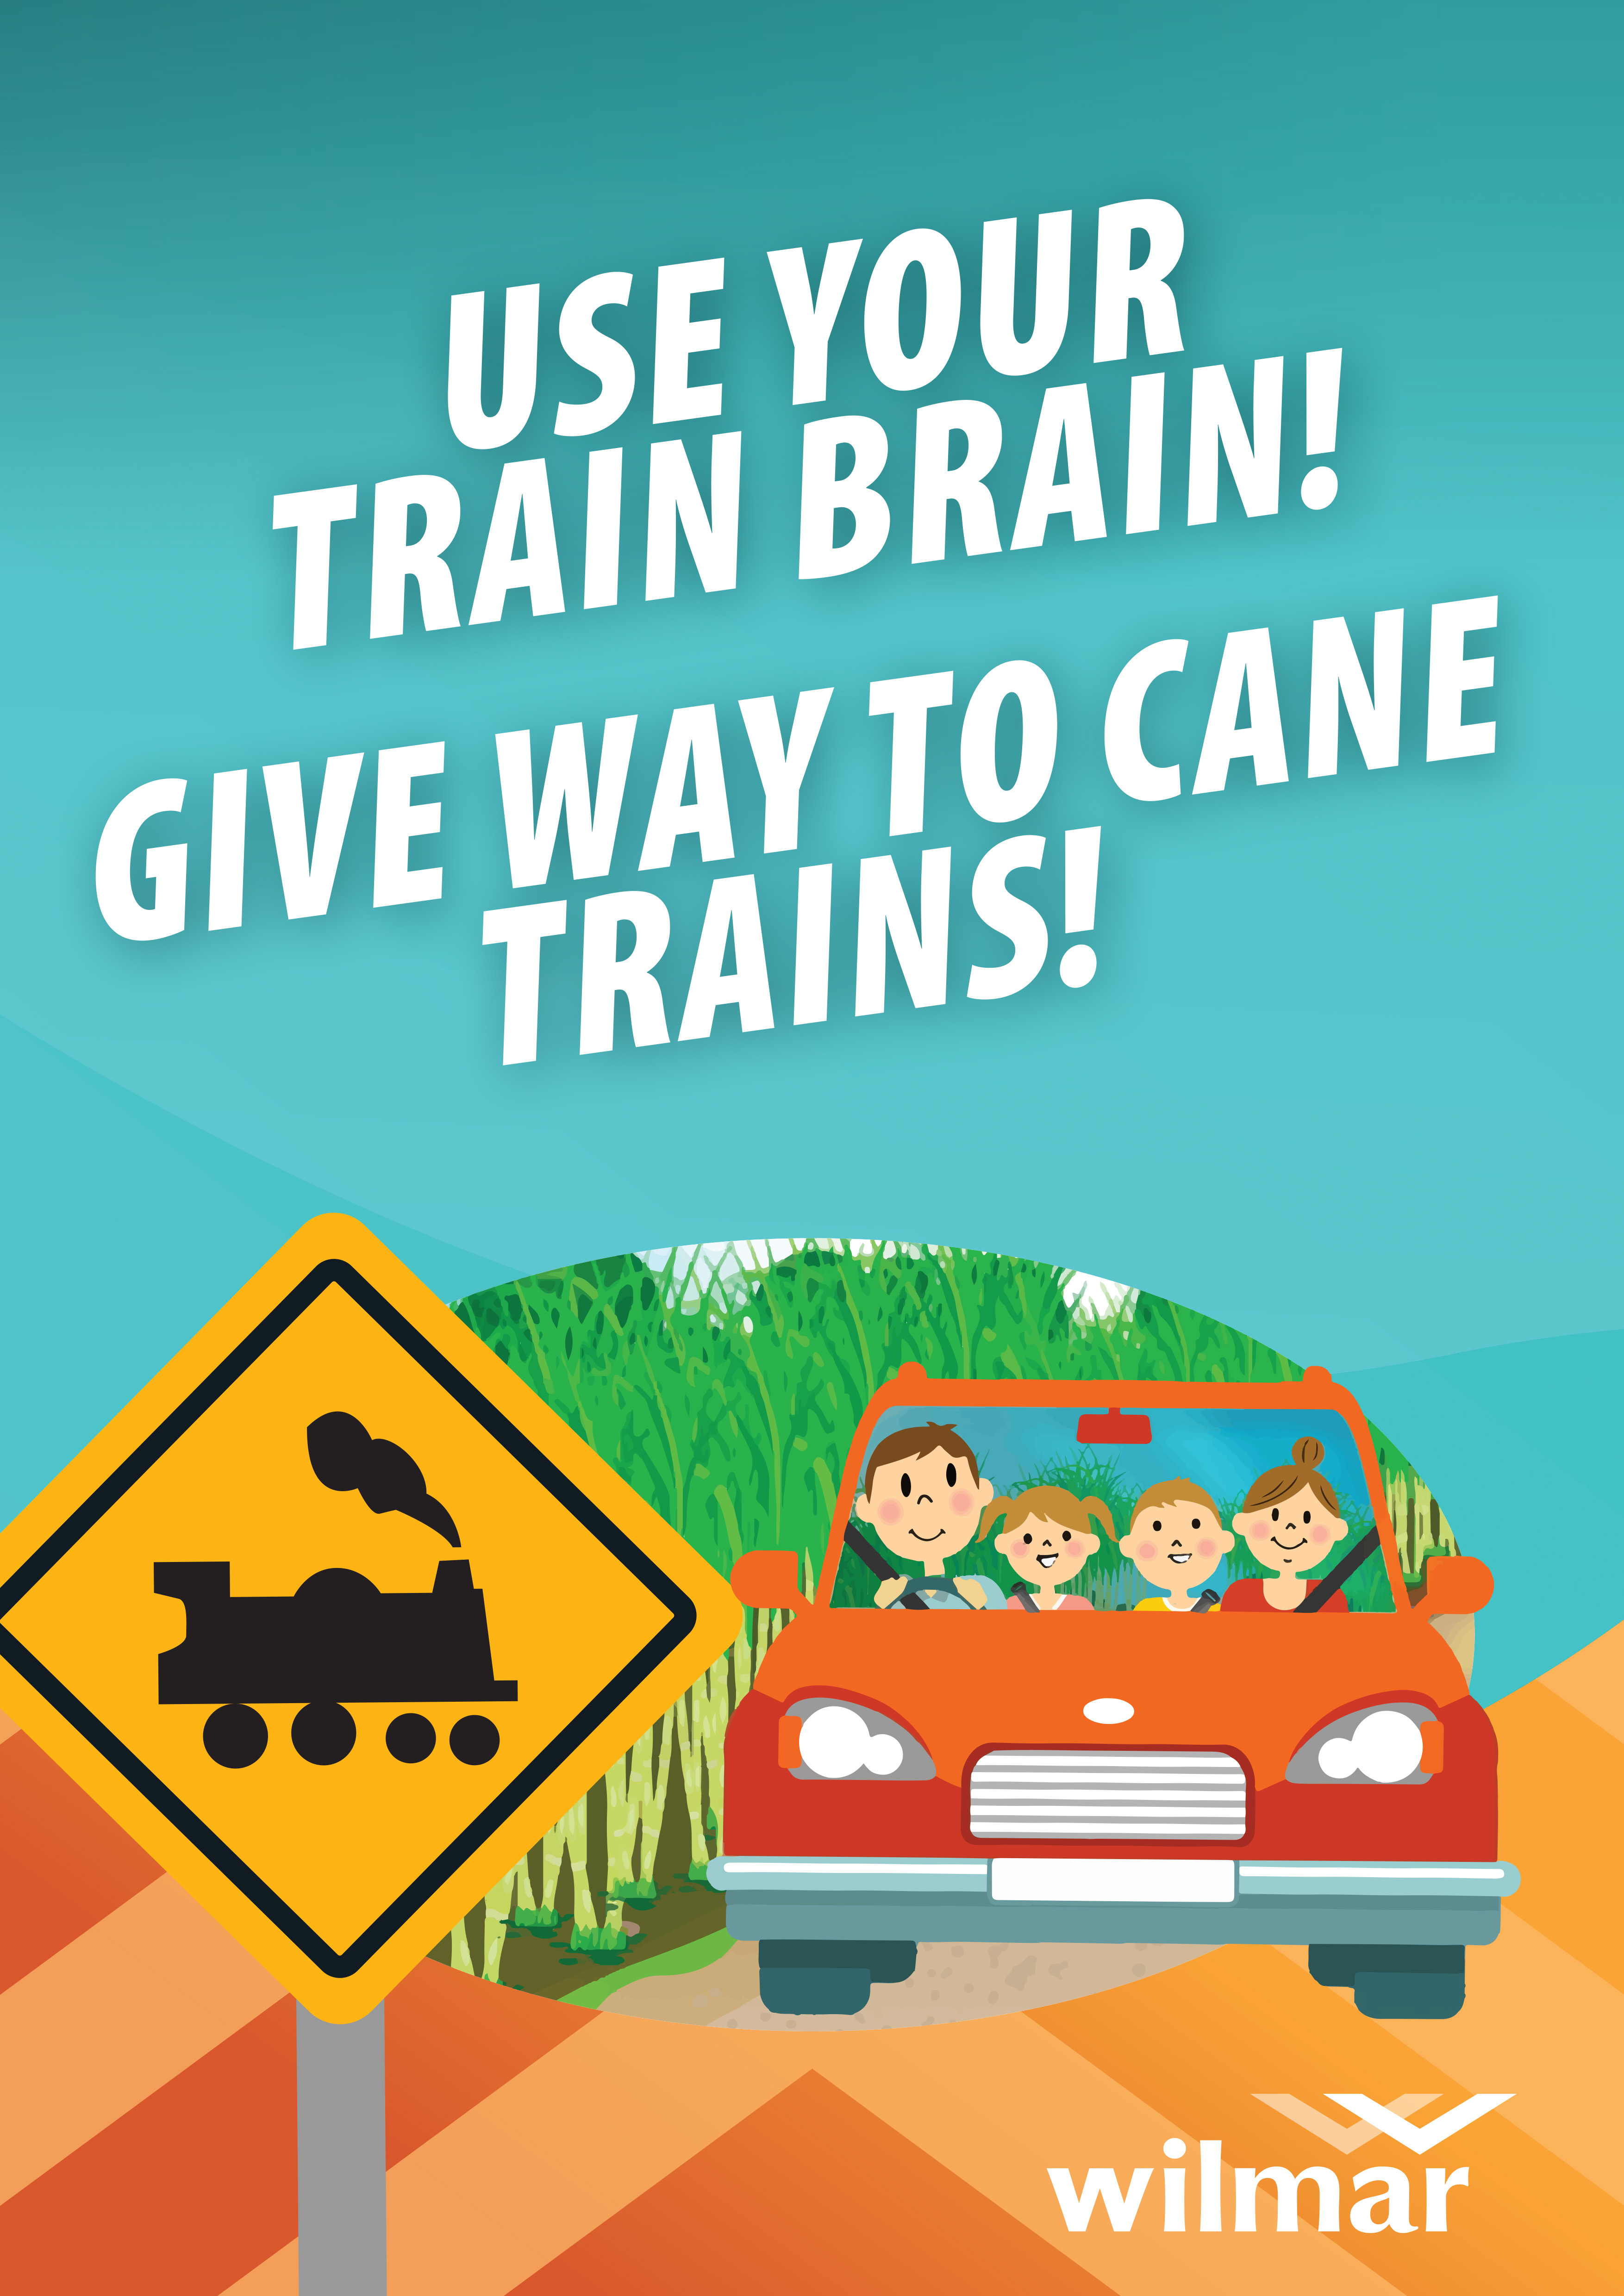 Use your train brain